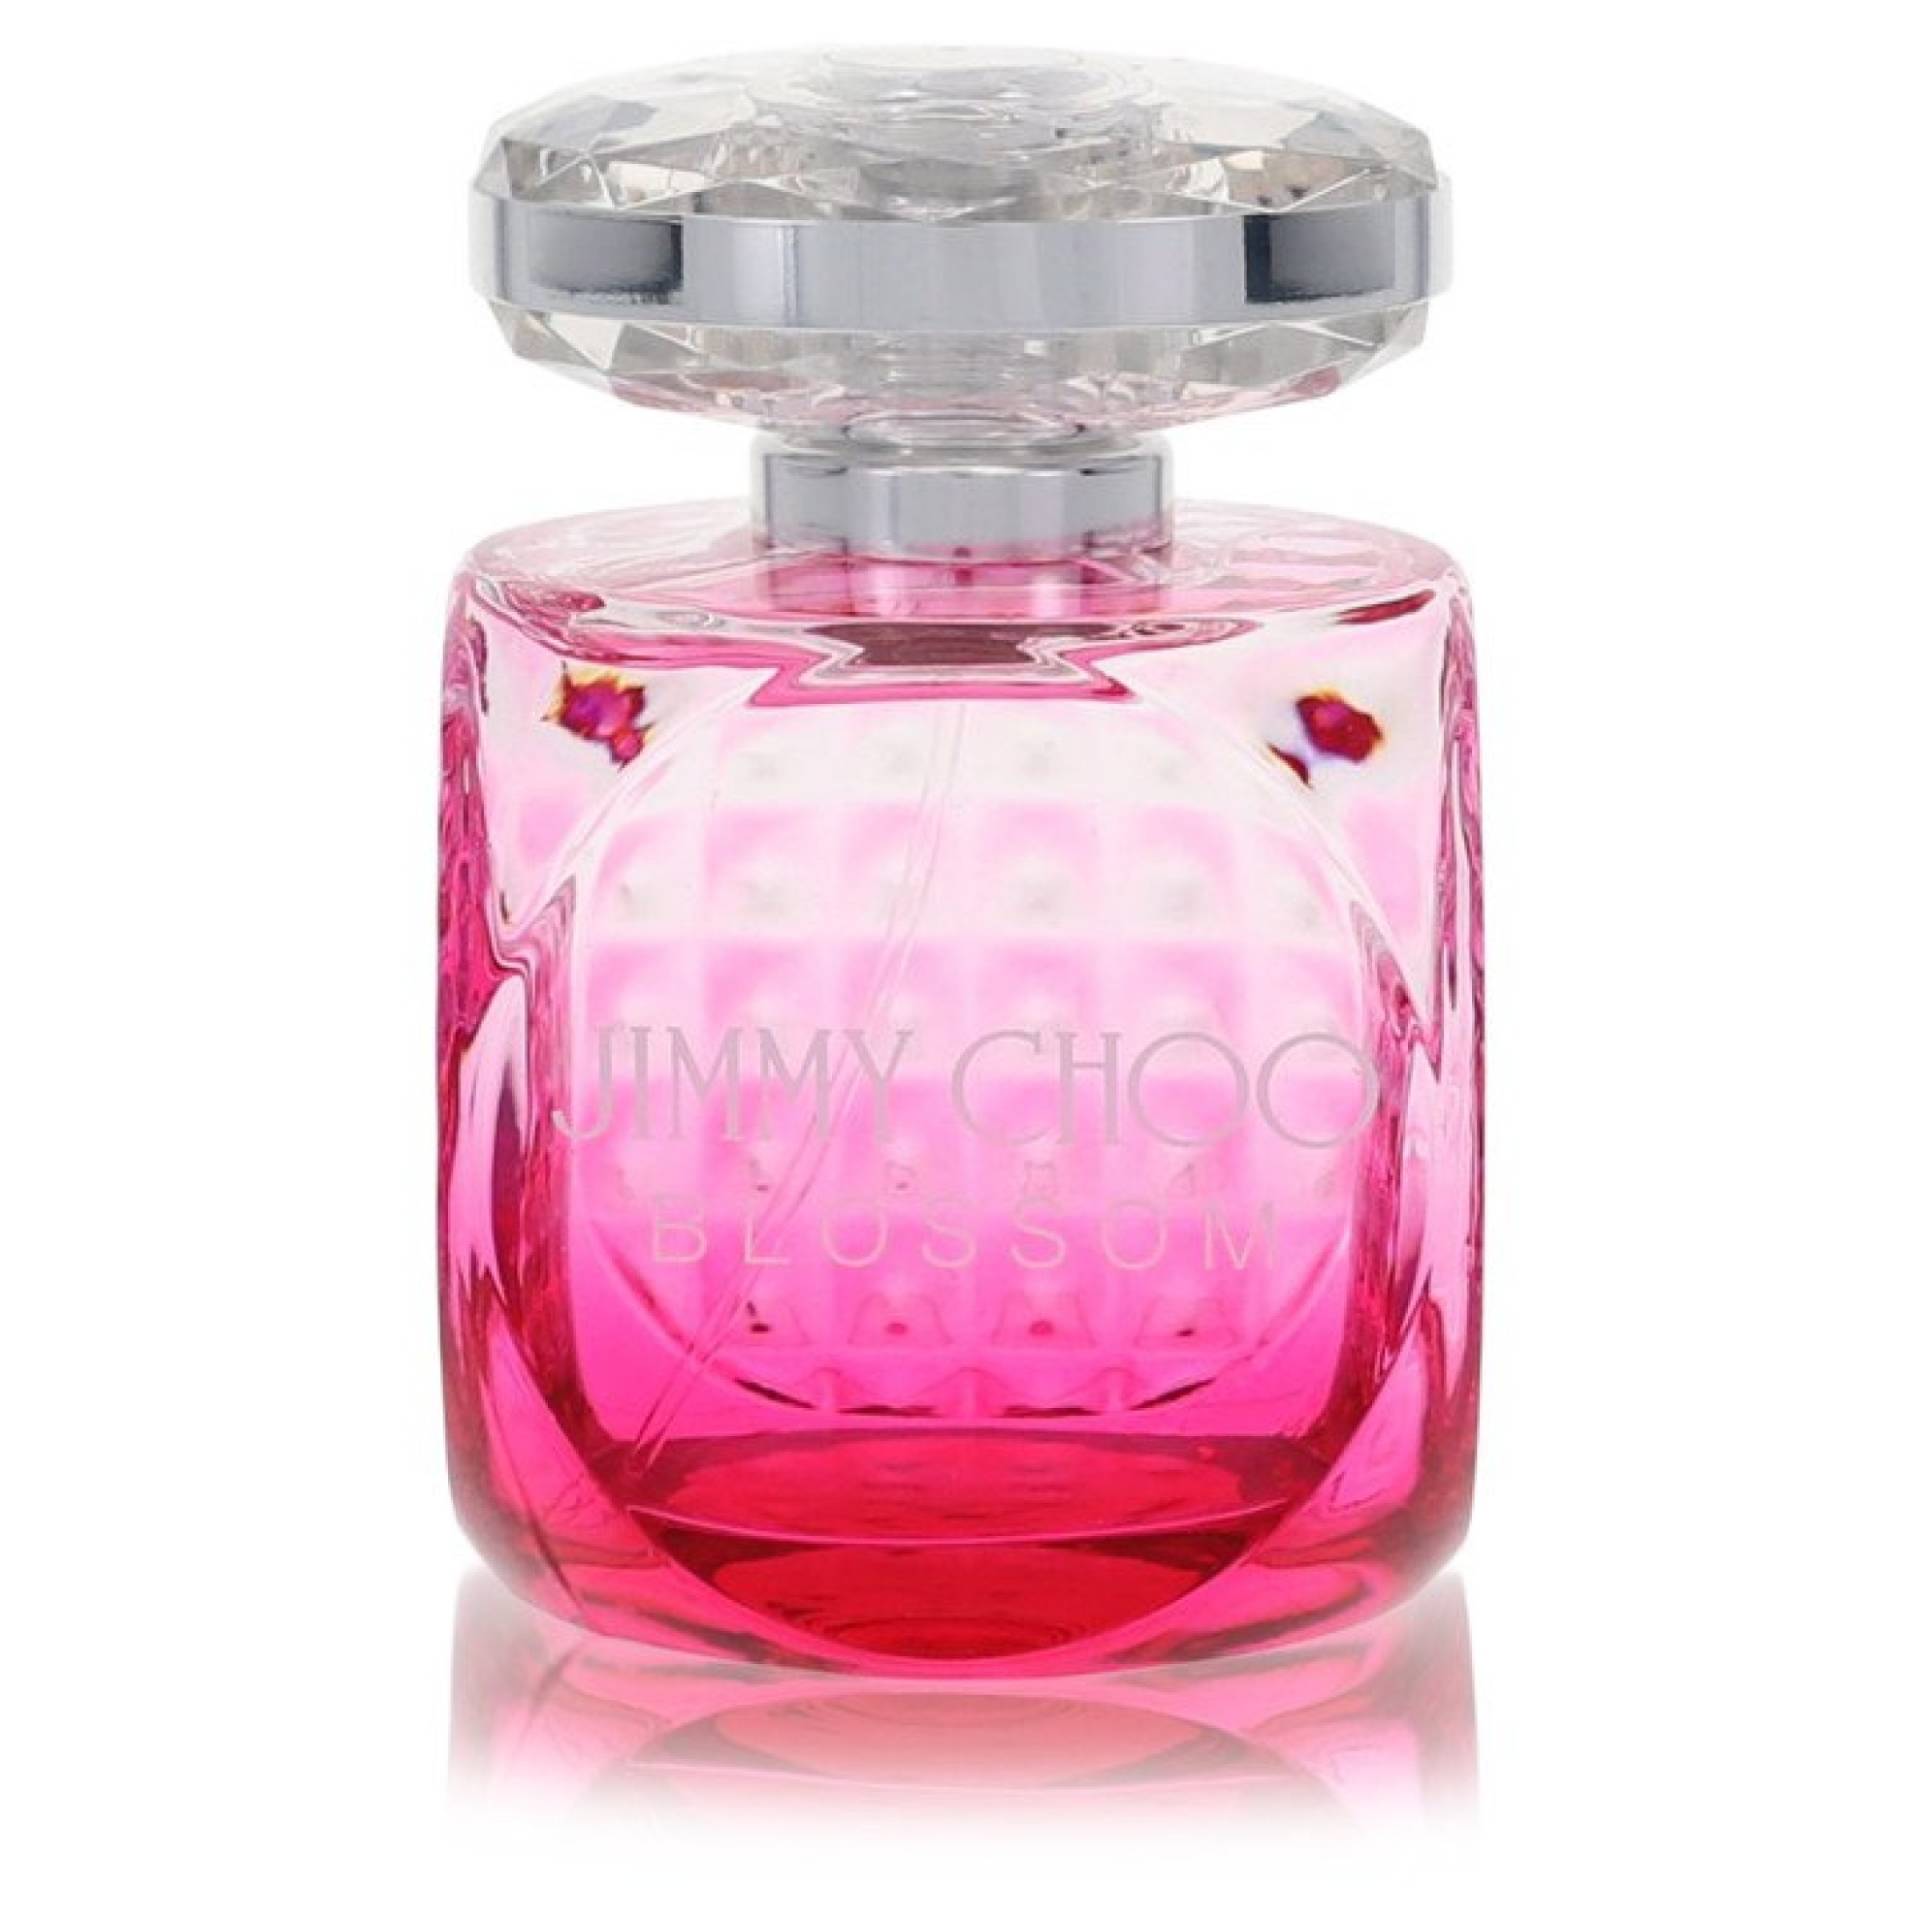 Jimmy Choo Blossom Eau De Parfum Spray (Tester) 100 ml von Jimmy Choo